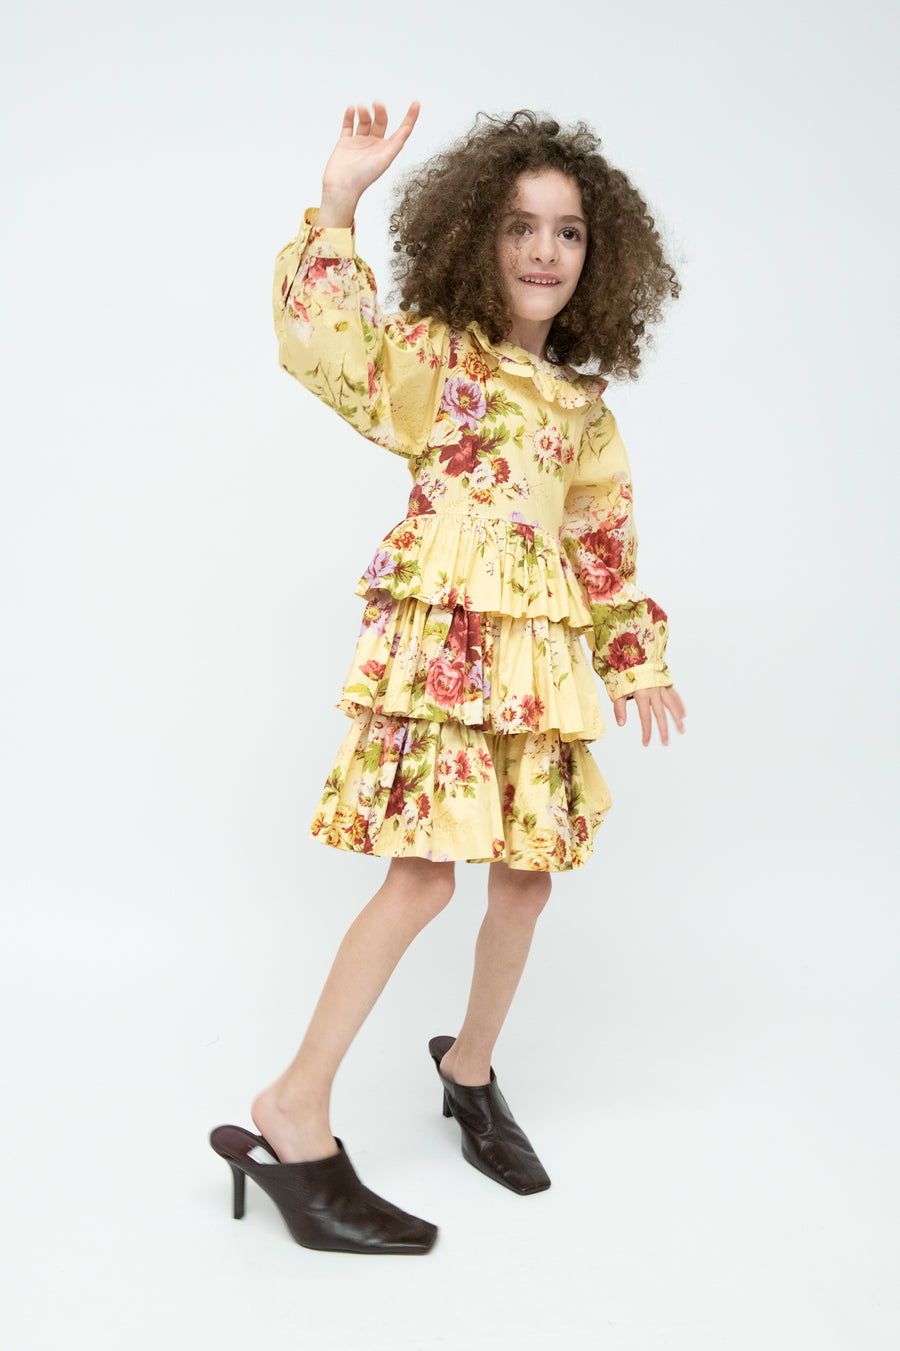 Laura Ashley x BATSHEVA Kid's Dress in Arundel - BATSHEVA